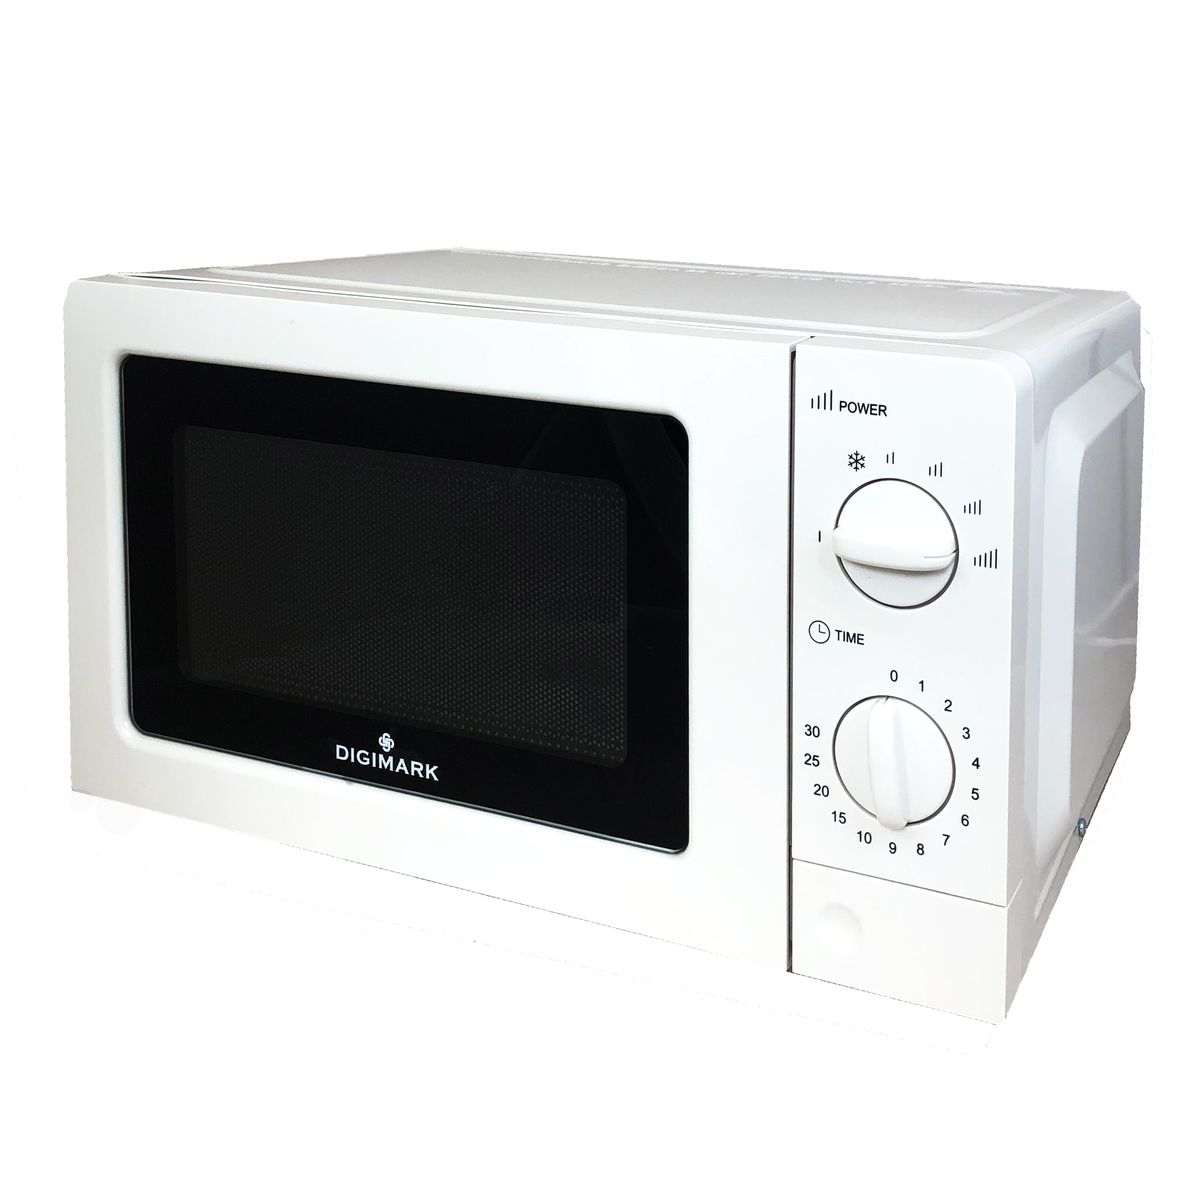 Digimark 20 Litre 700W Microwave Oven